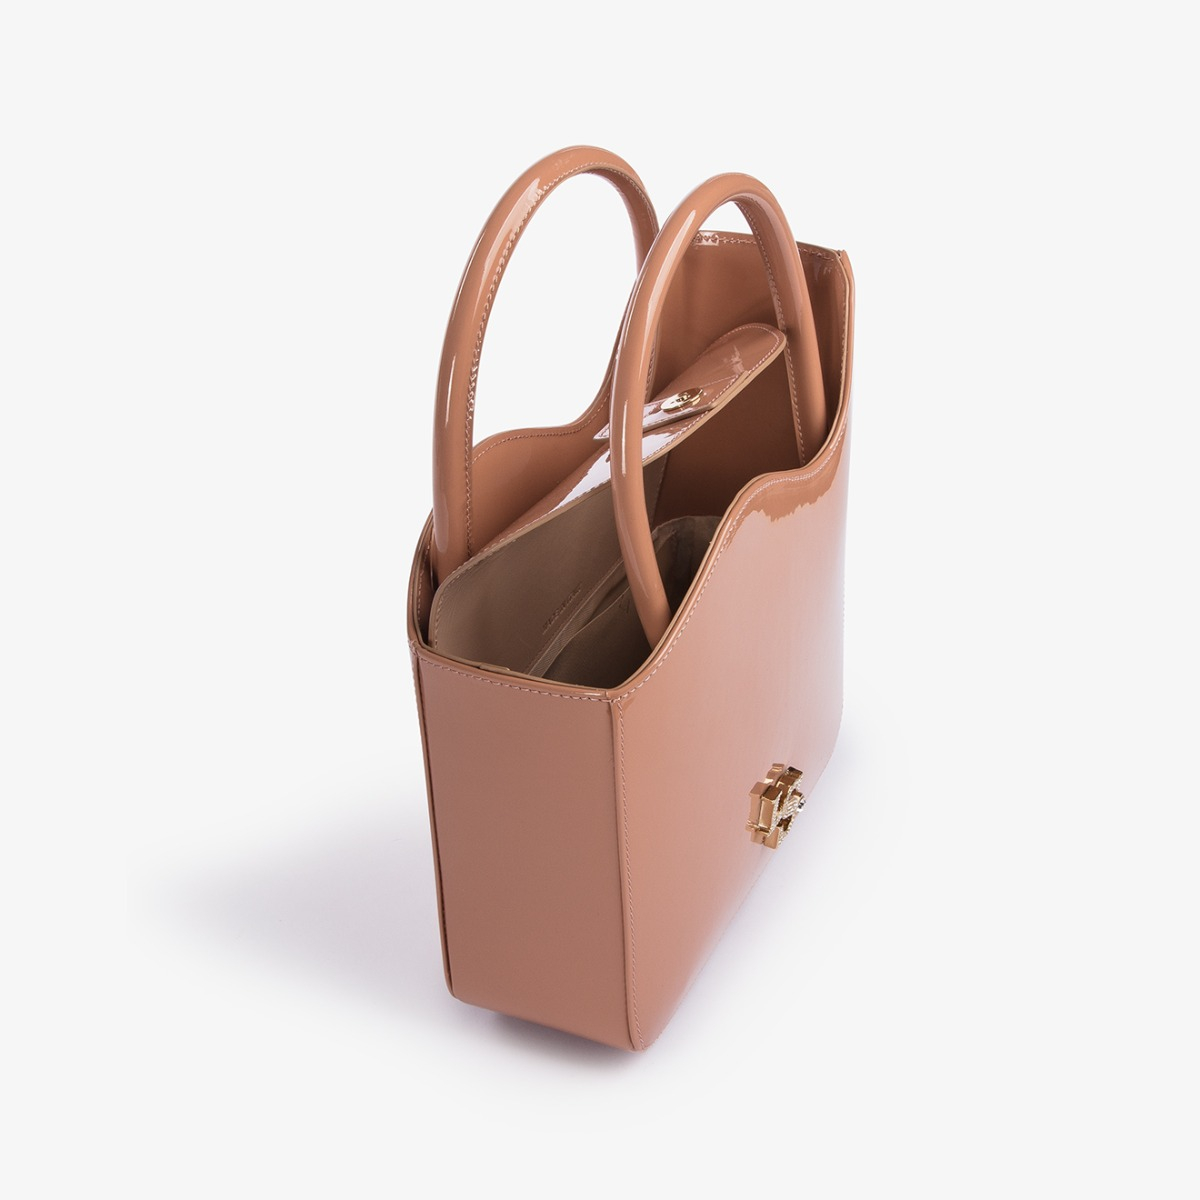 IVY BAG - Le Silla | Official Online Store